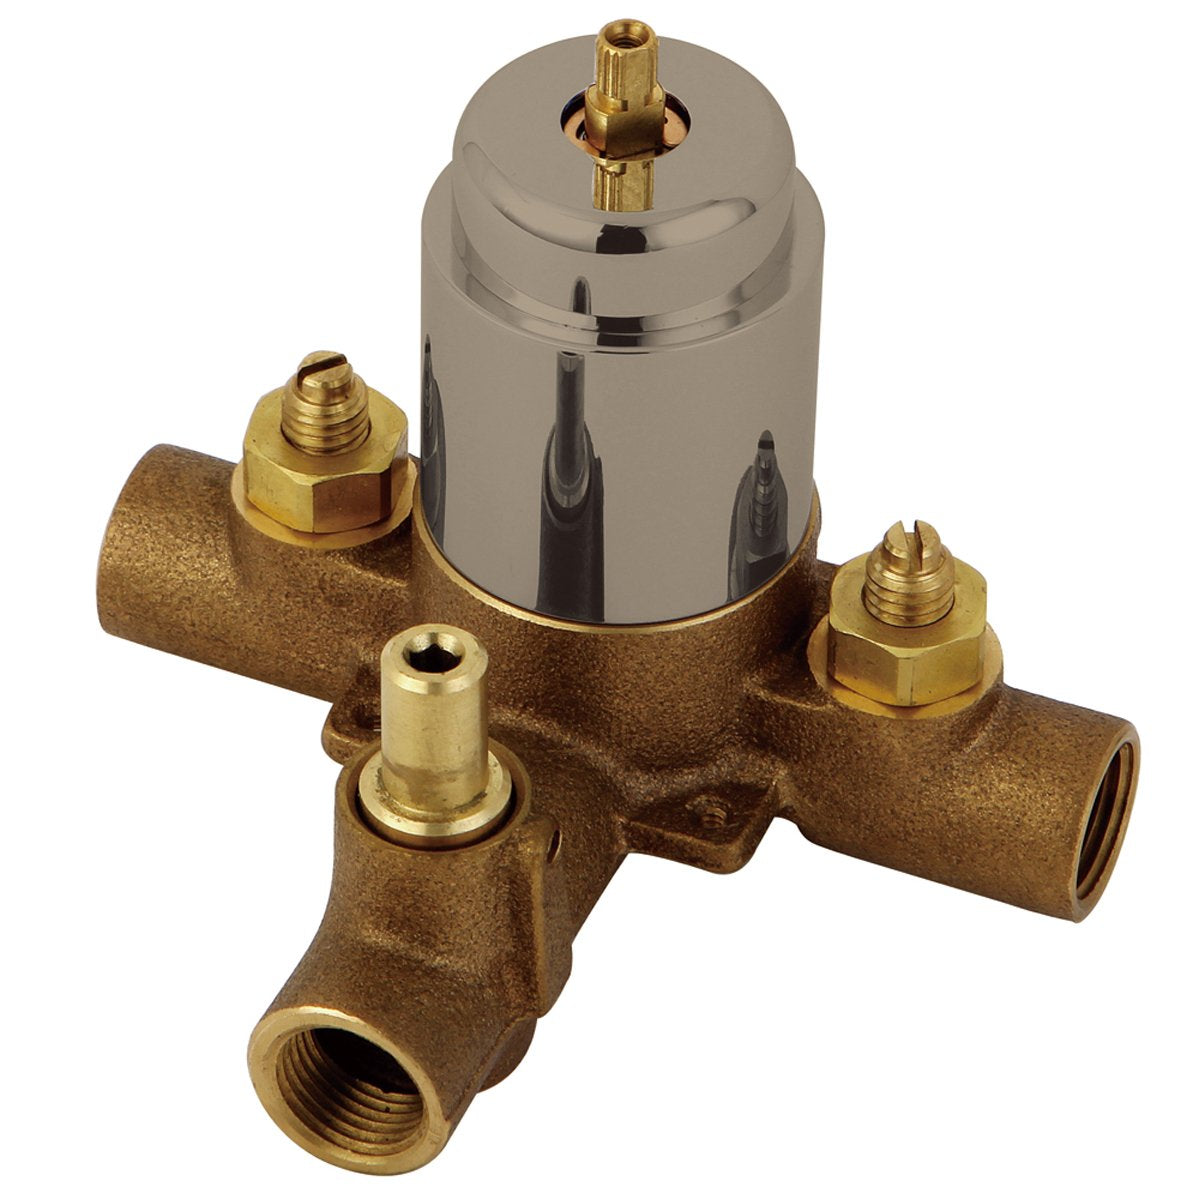 Kingston Brass Plumbing Parts Shower Valve in Satin Nickel-Bathroom Accessories-Free Shipping-Directsinks.